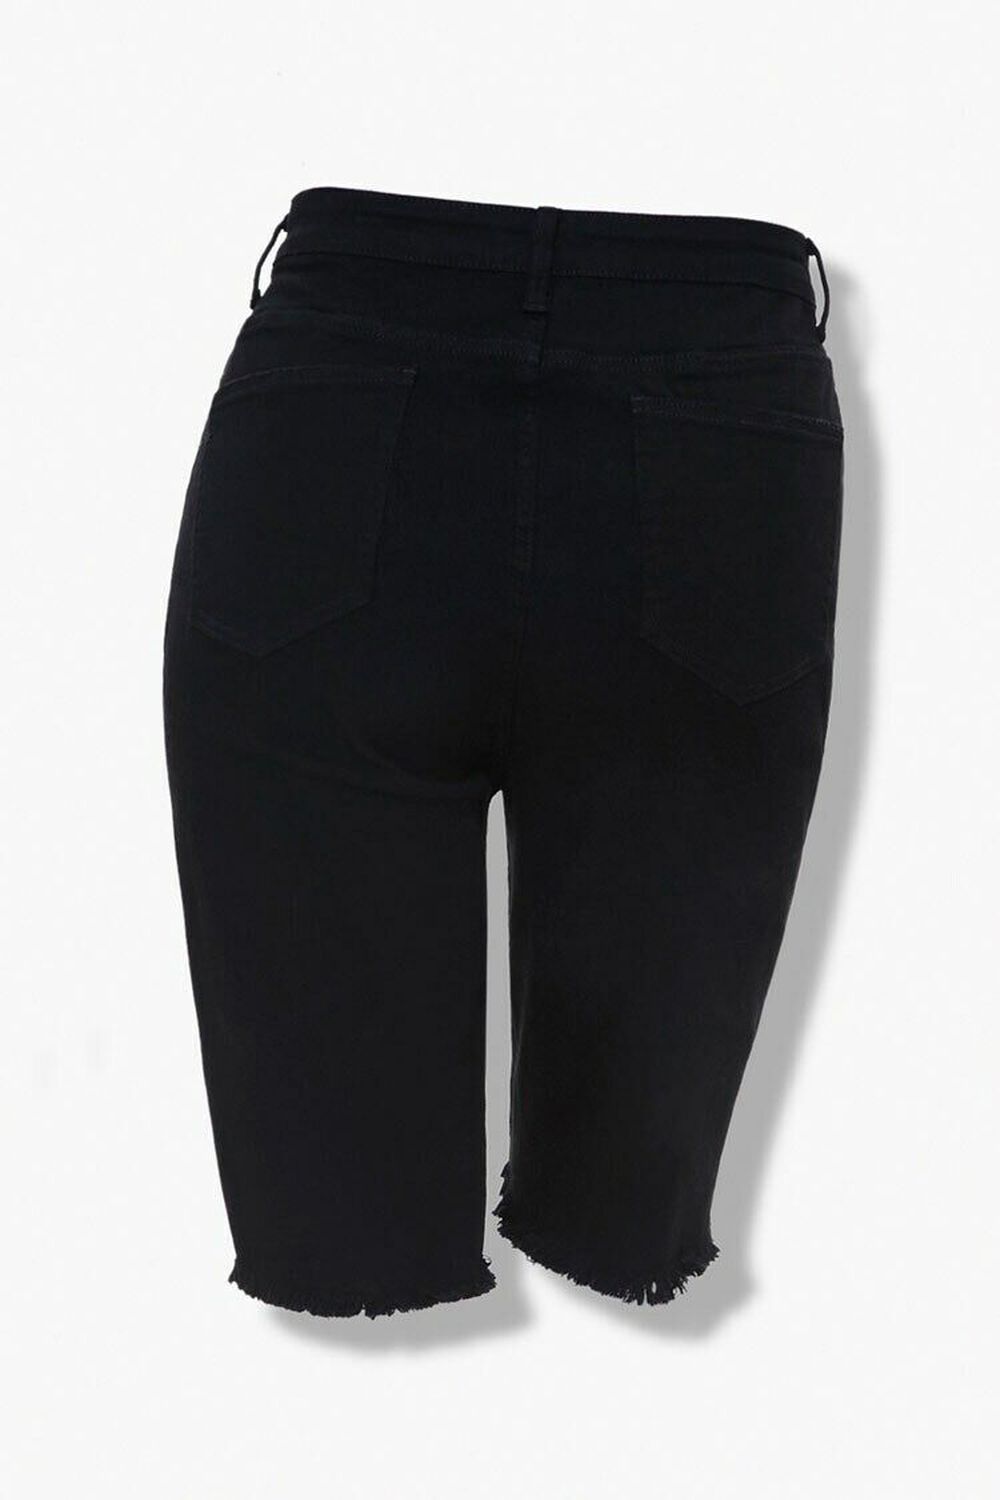 BLACK Plus Size Denim Bermuda Shorts, image 3